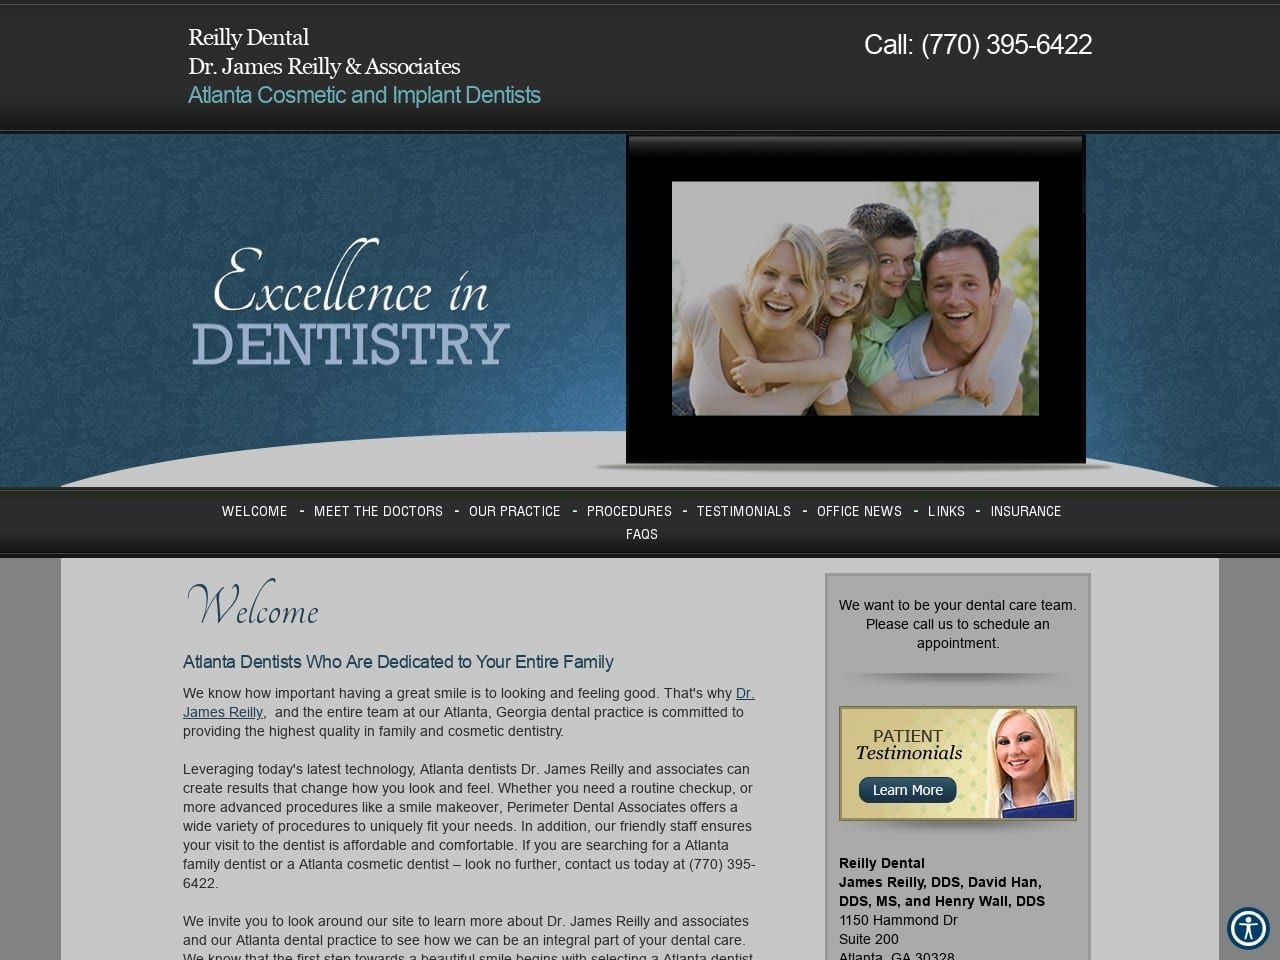 Perimeter Dental Associates Website Screenshot from perimeterdentalassociates.com